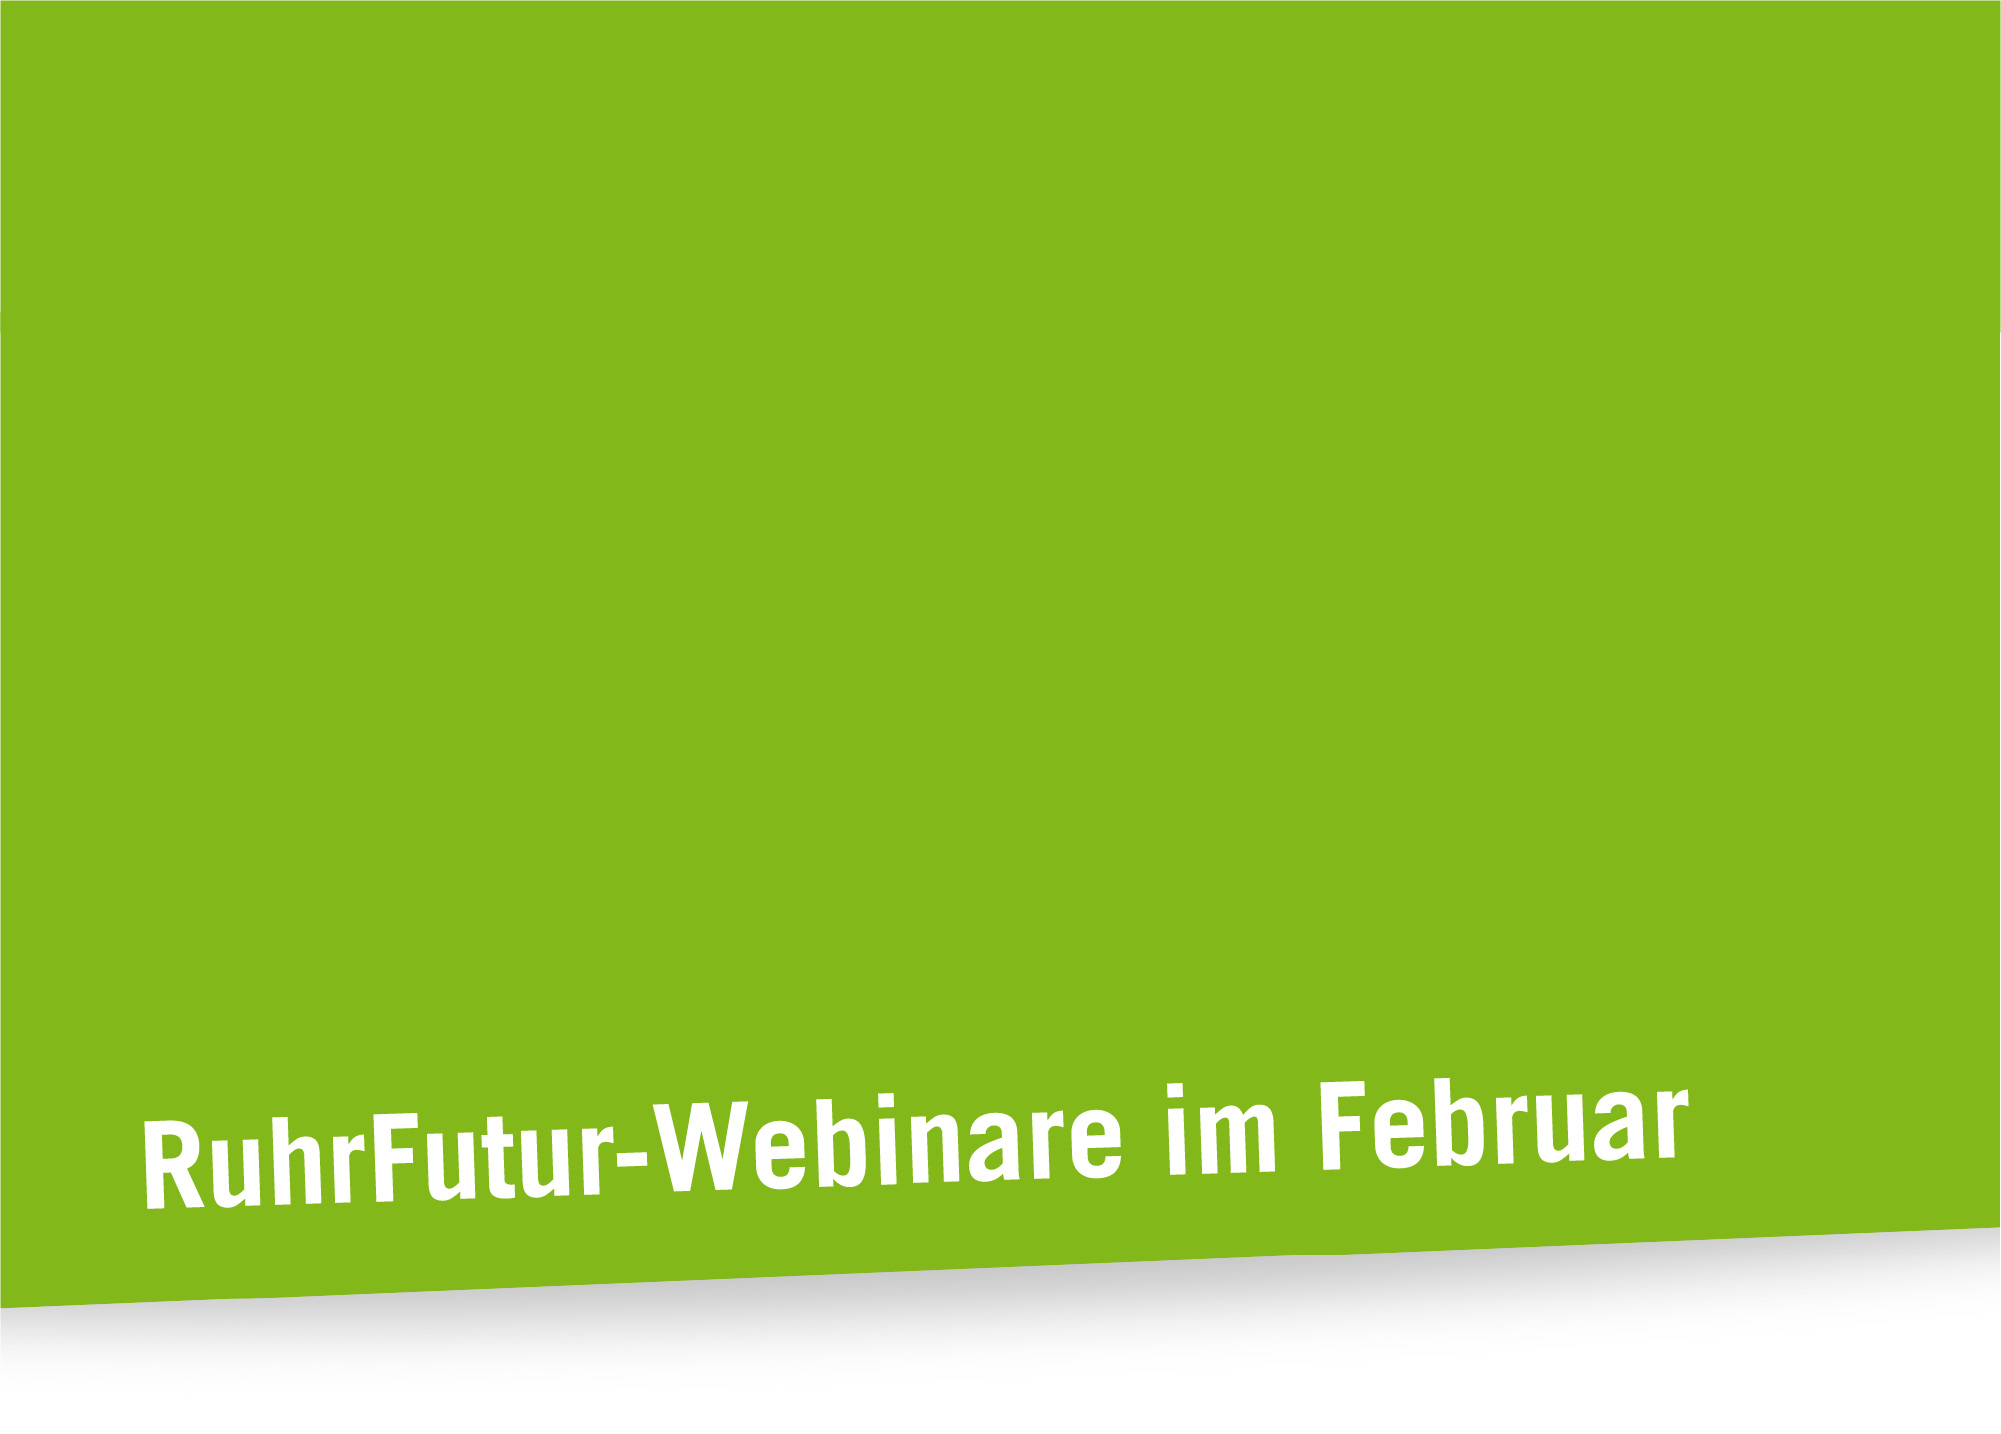 RuhrFutur-Webinare im Februar